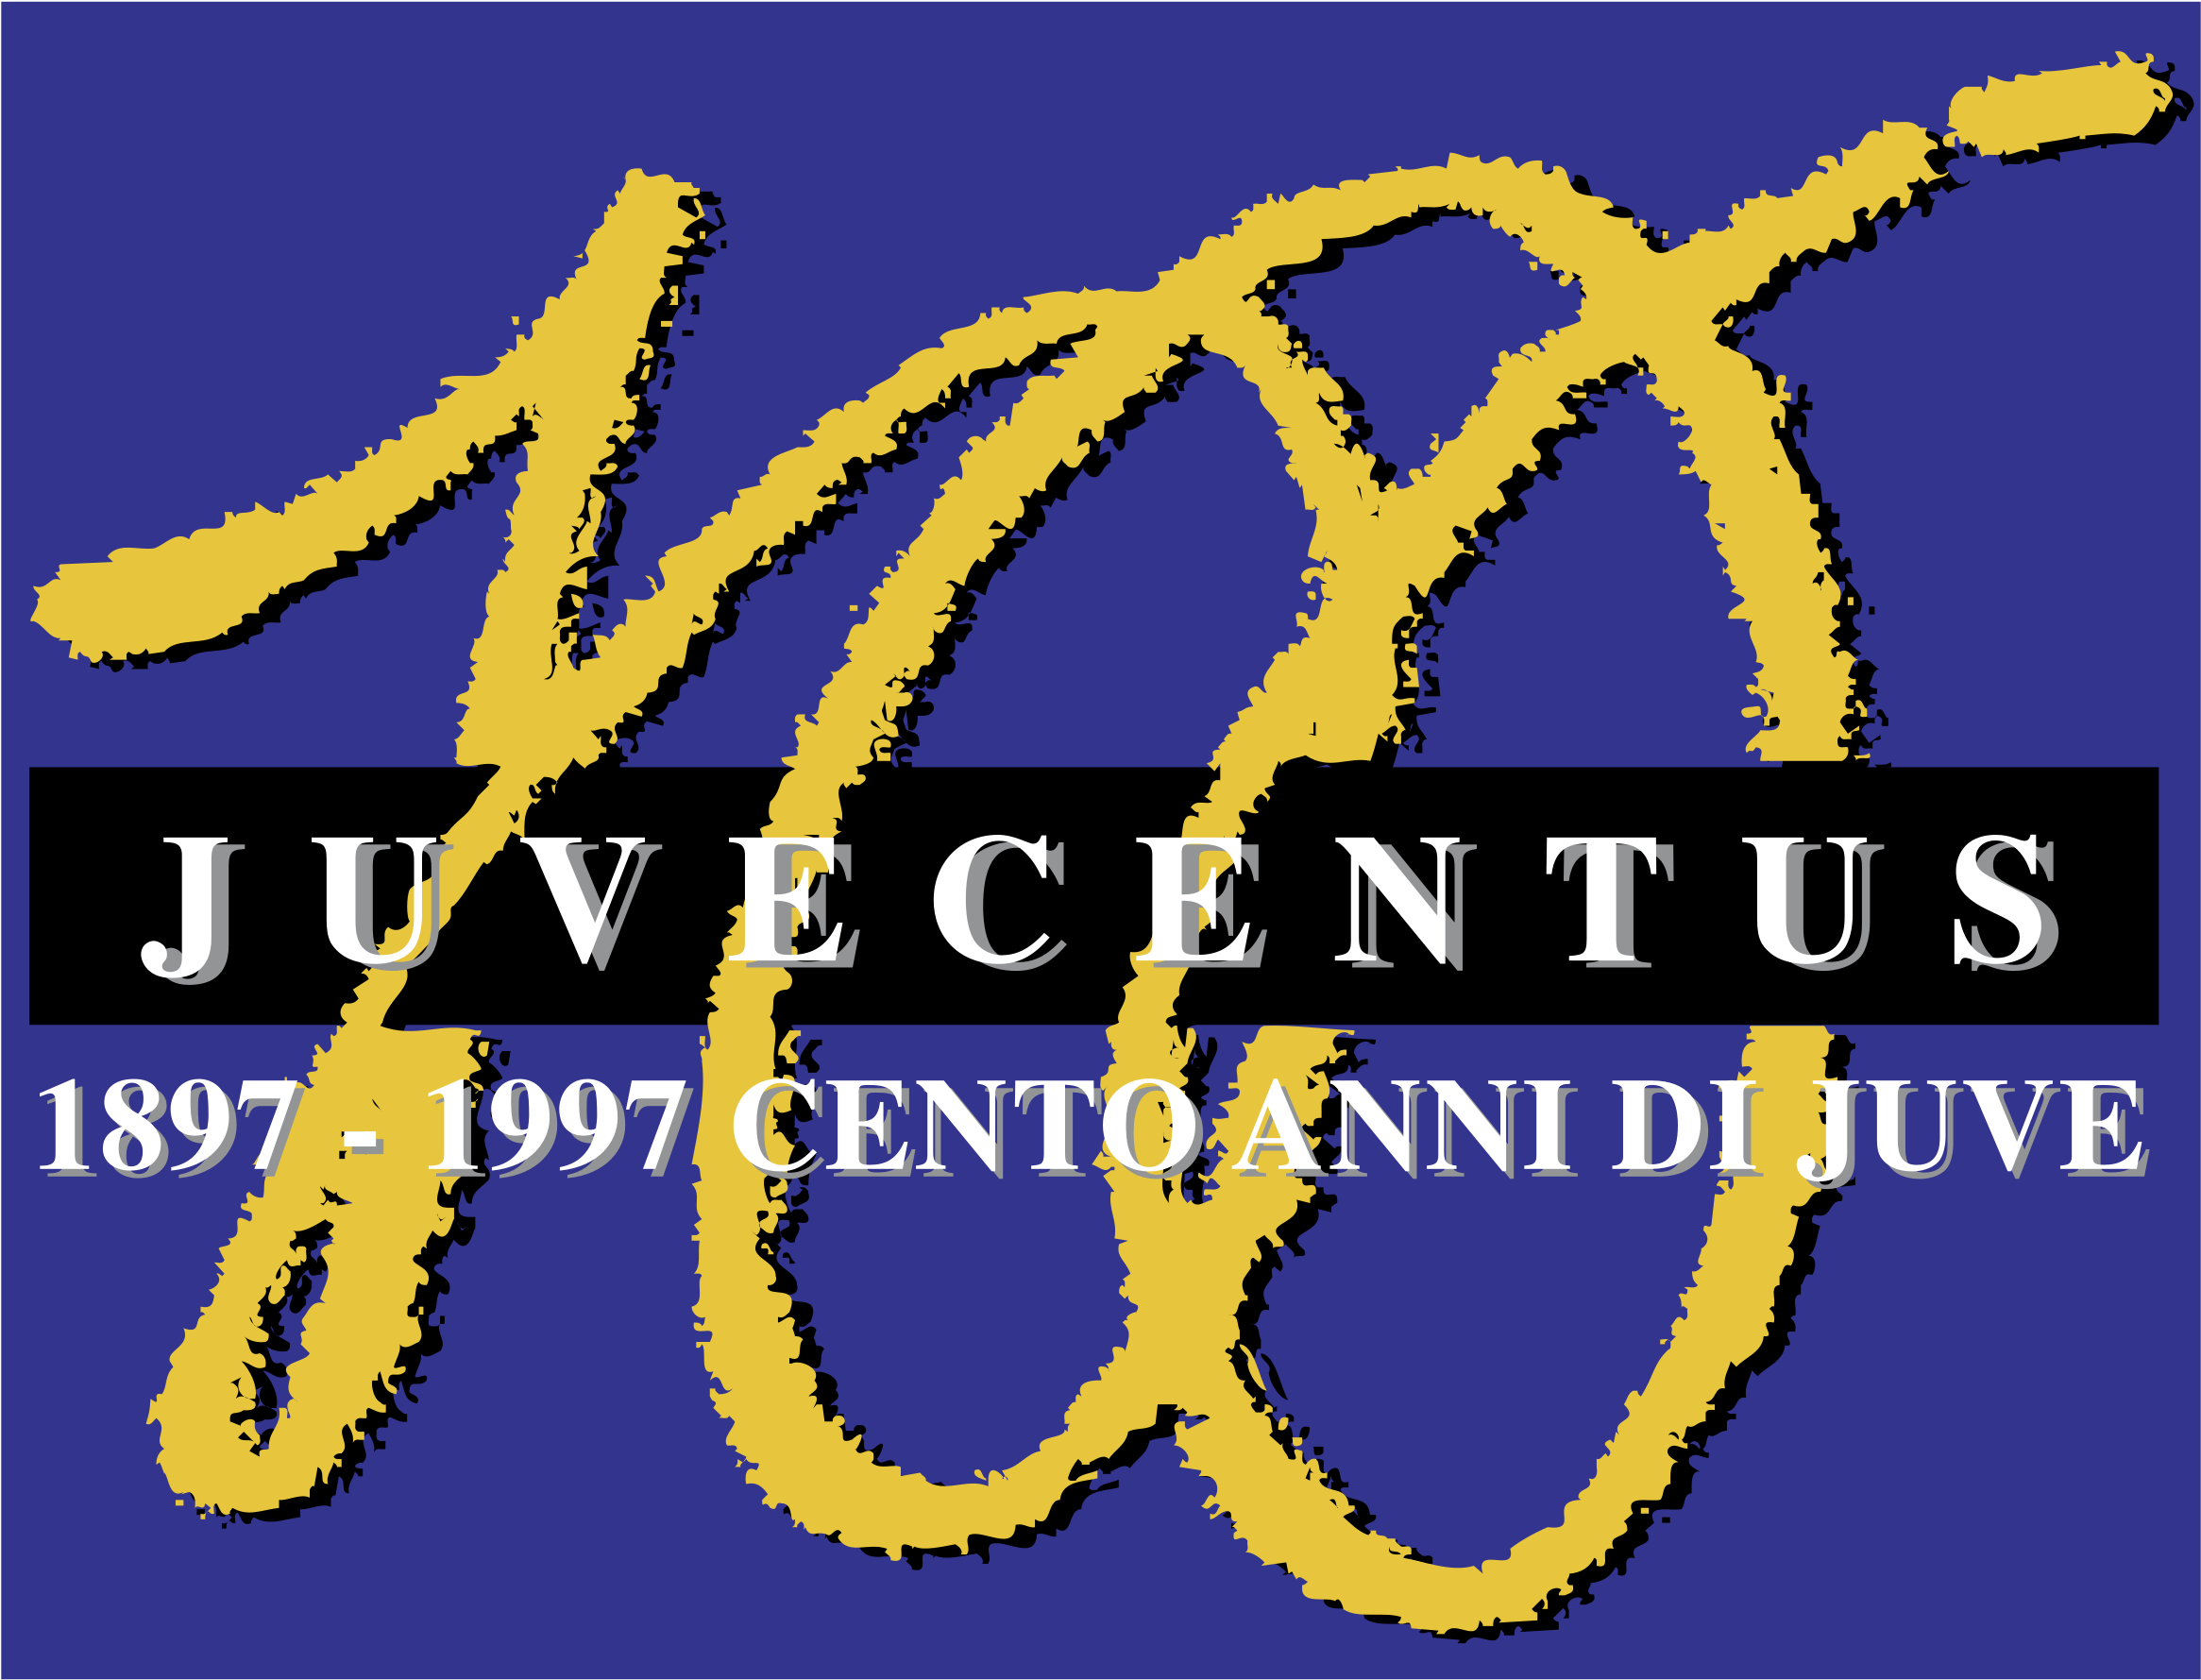 Juventus Centenary Logo18971997